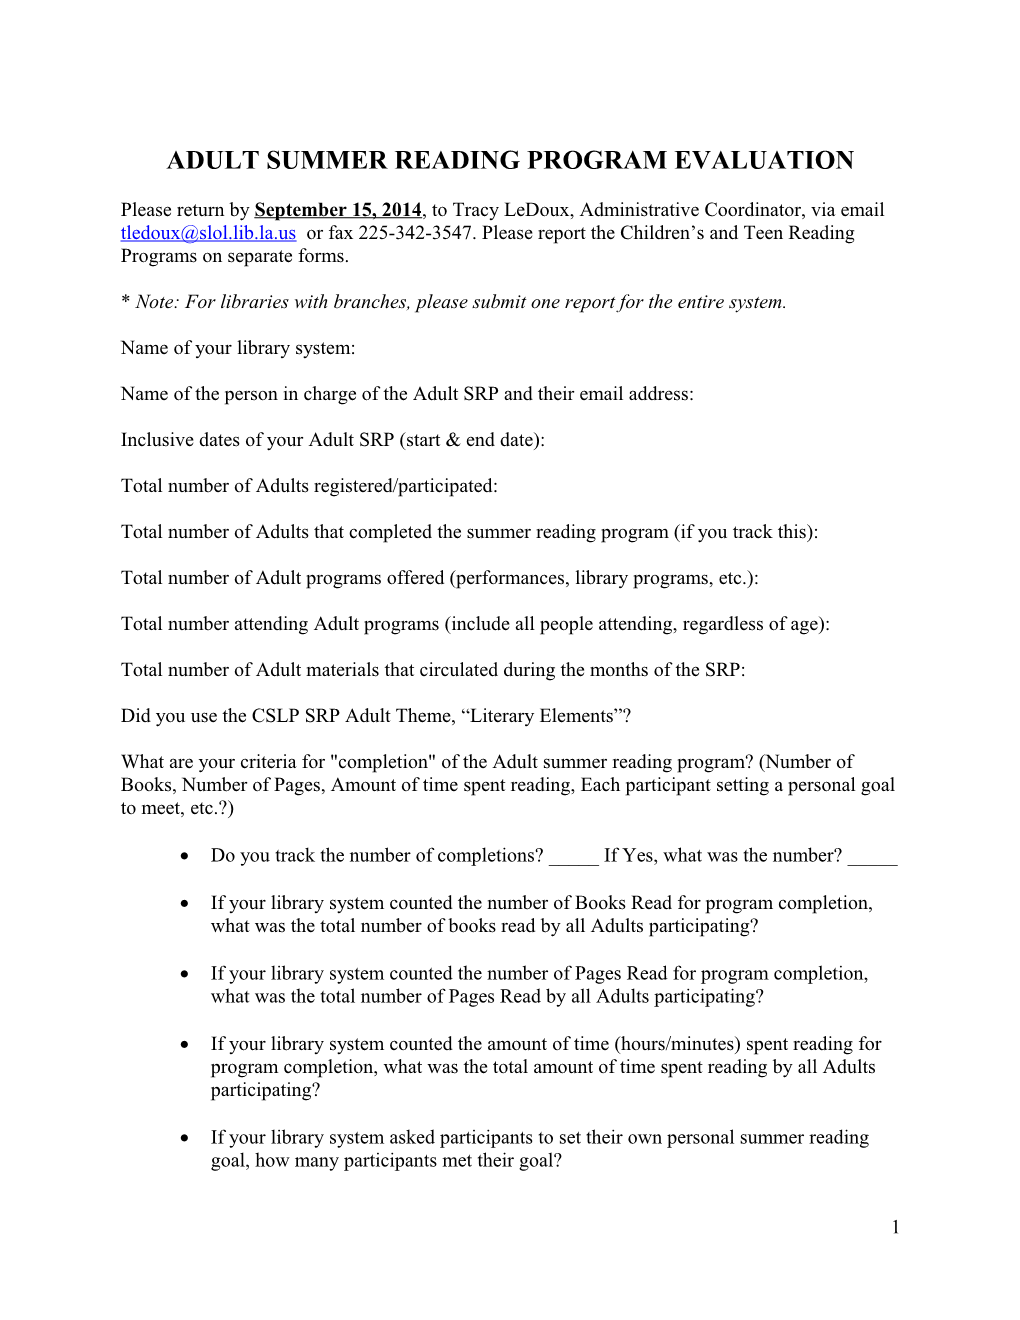 Adult Summer Reading Program Evaluation